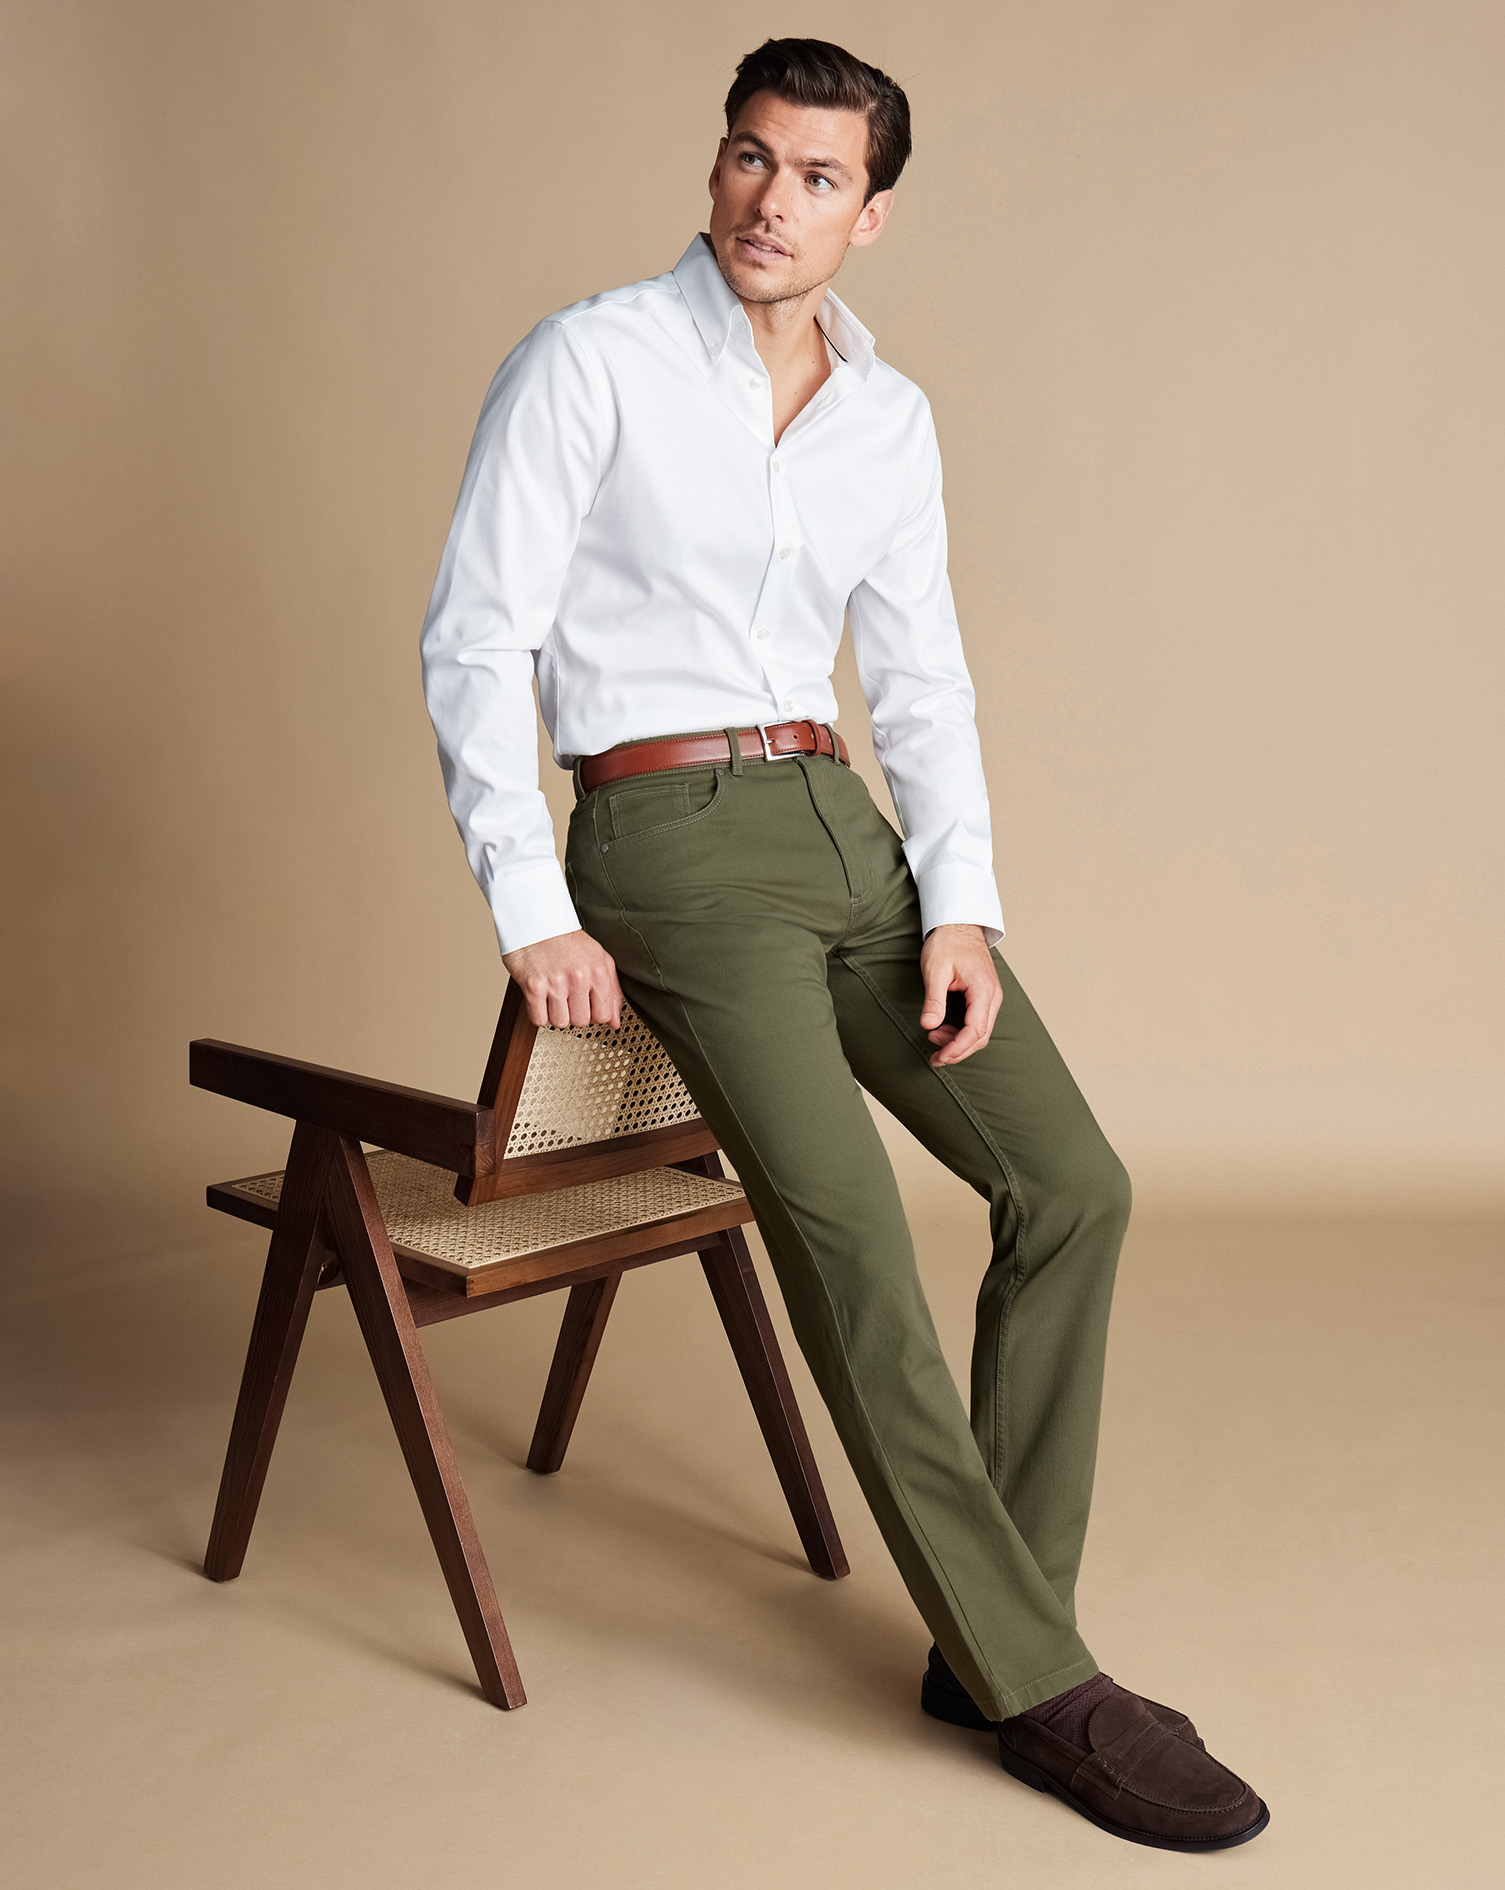 Men's Charles Tyrwhitt Twill 5 Pocket Jeans - Olive Green Size W34 L32 Cotton
